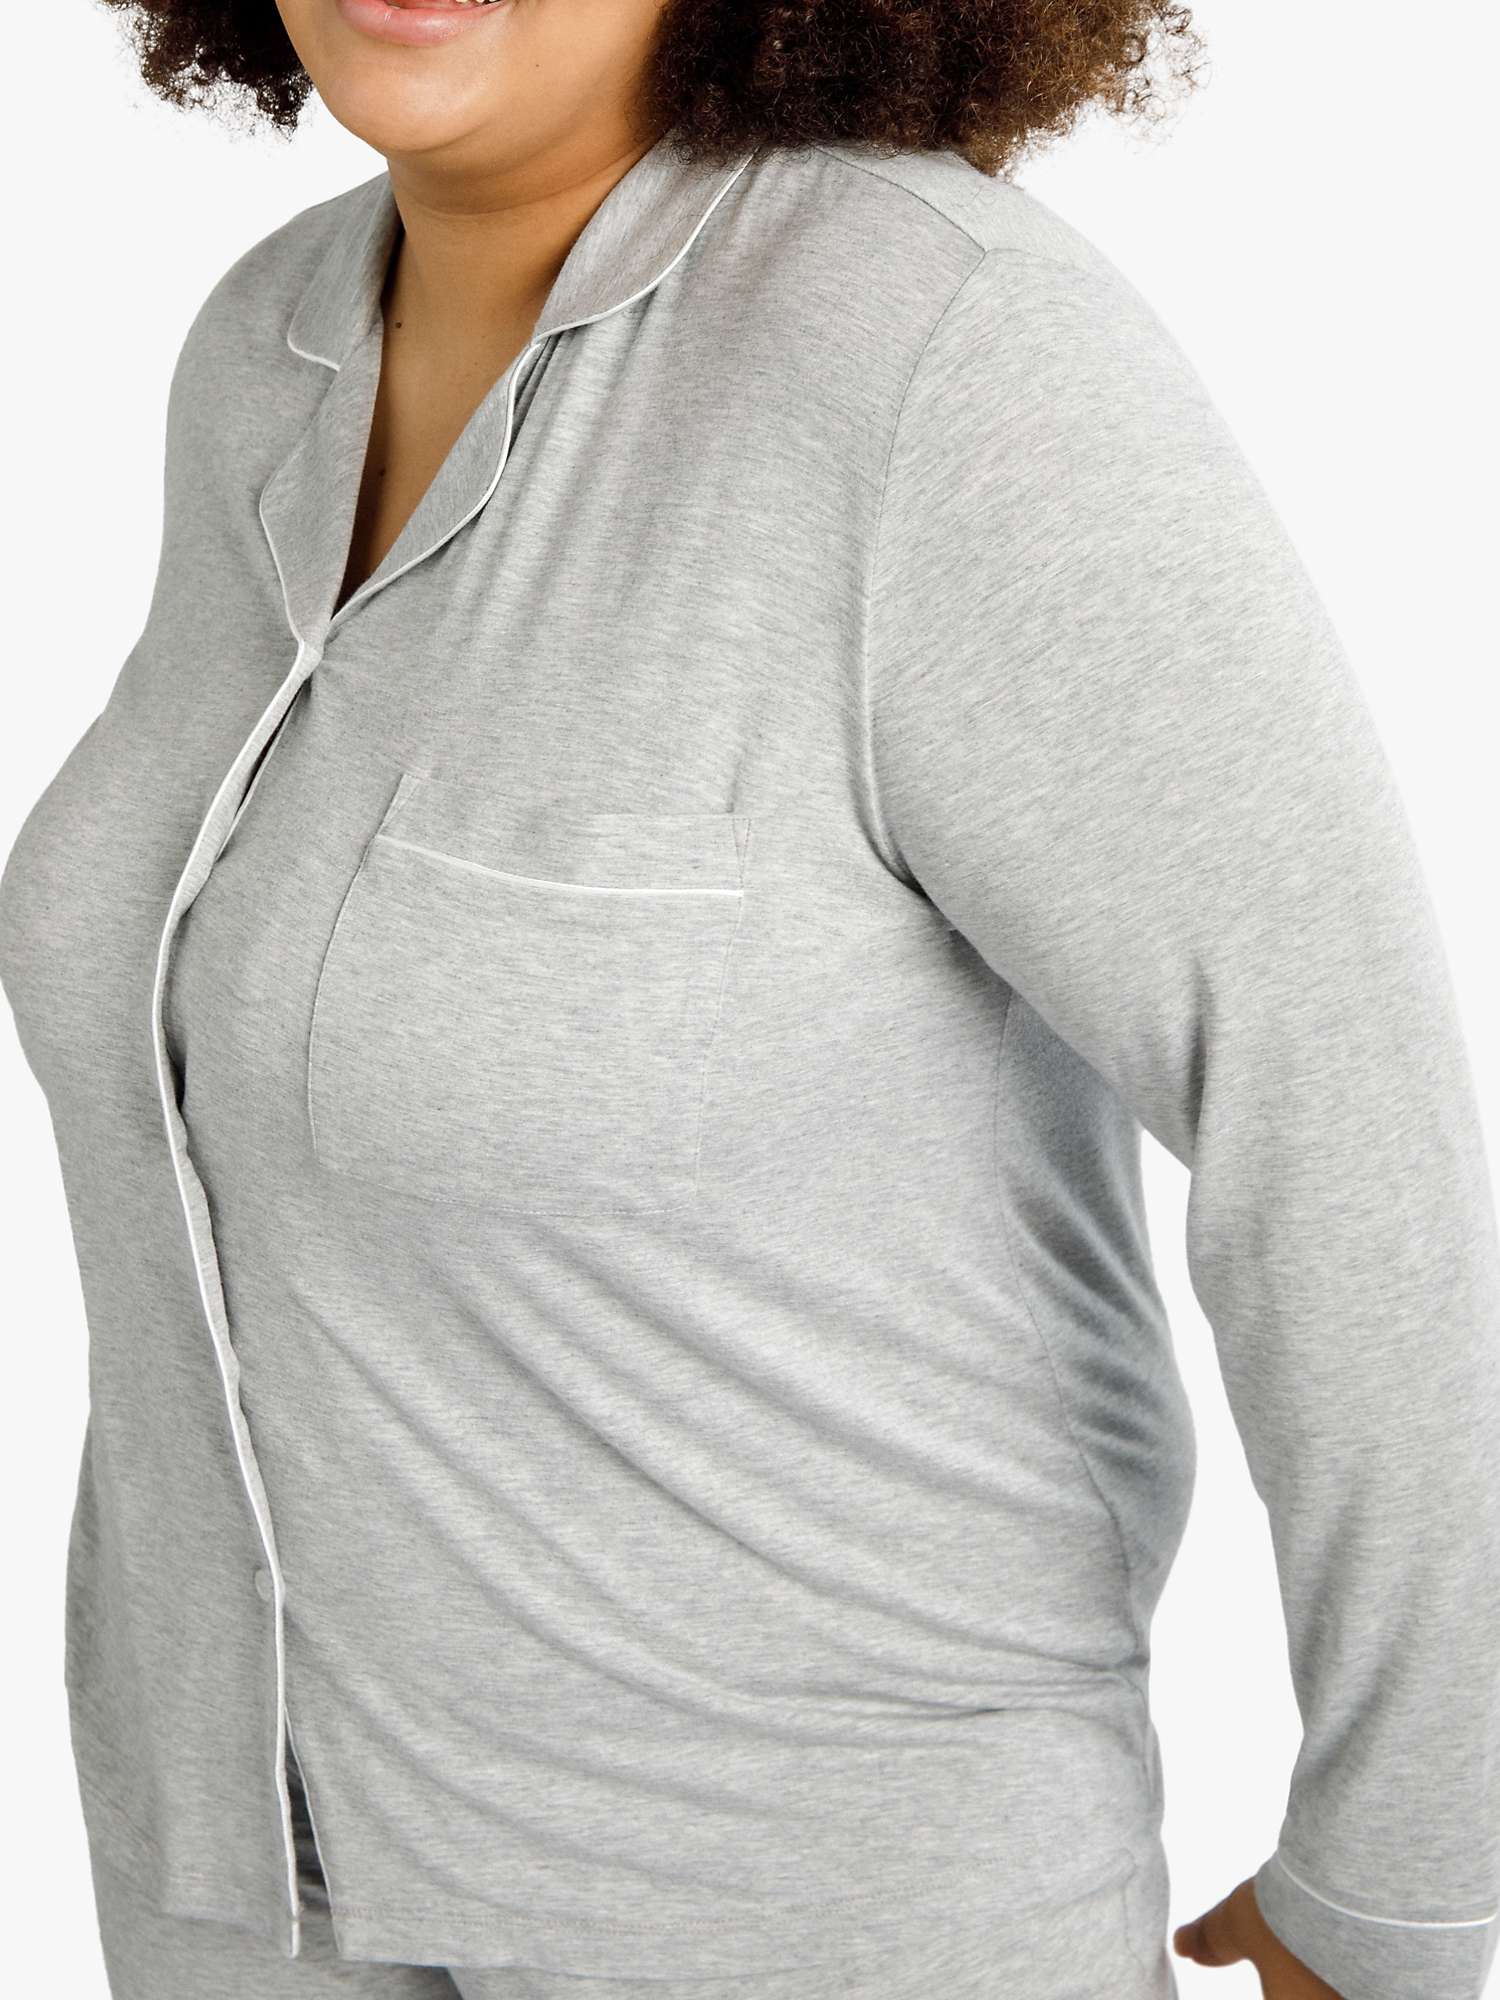 Buy Chelsea Peers Curve Button Up Pyjama Set, Grey Online at johnlewis.com